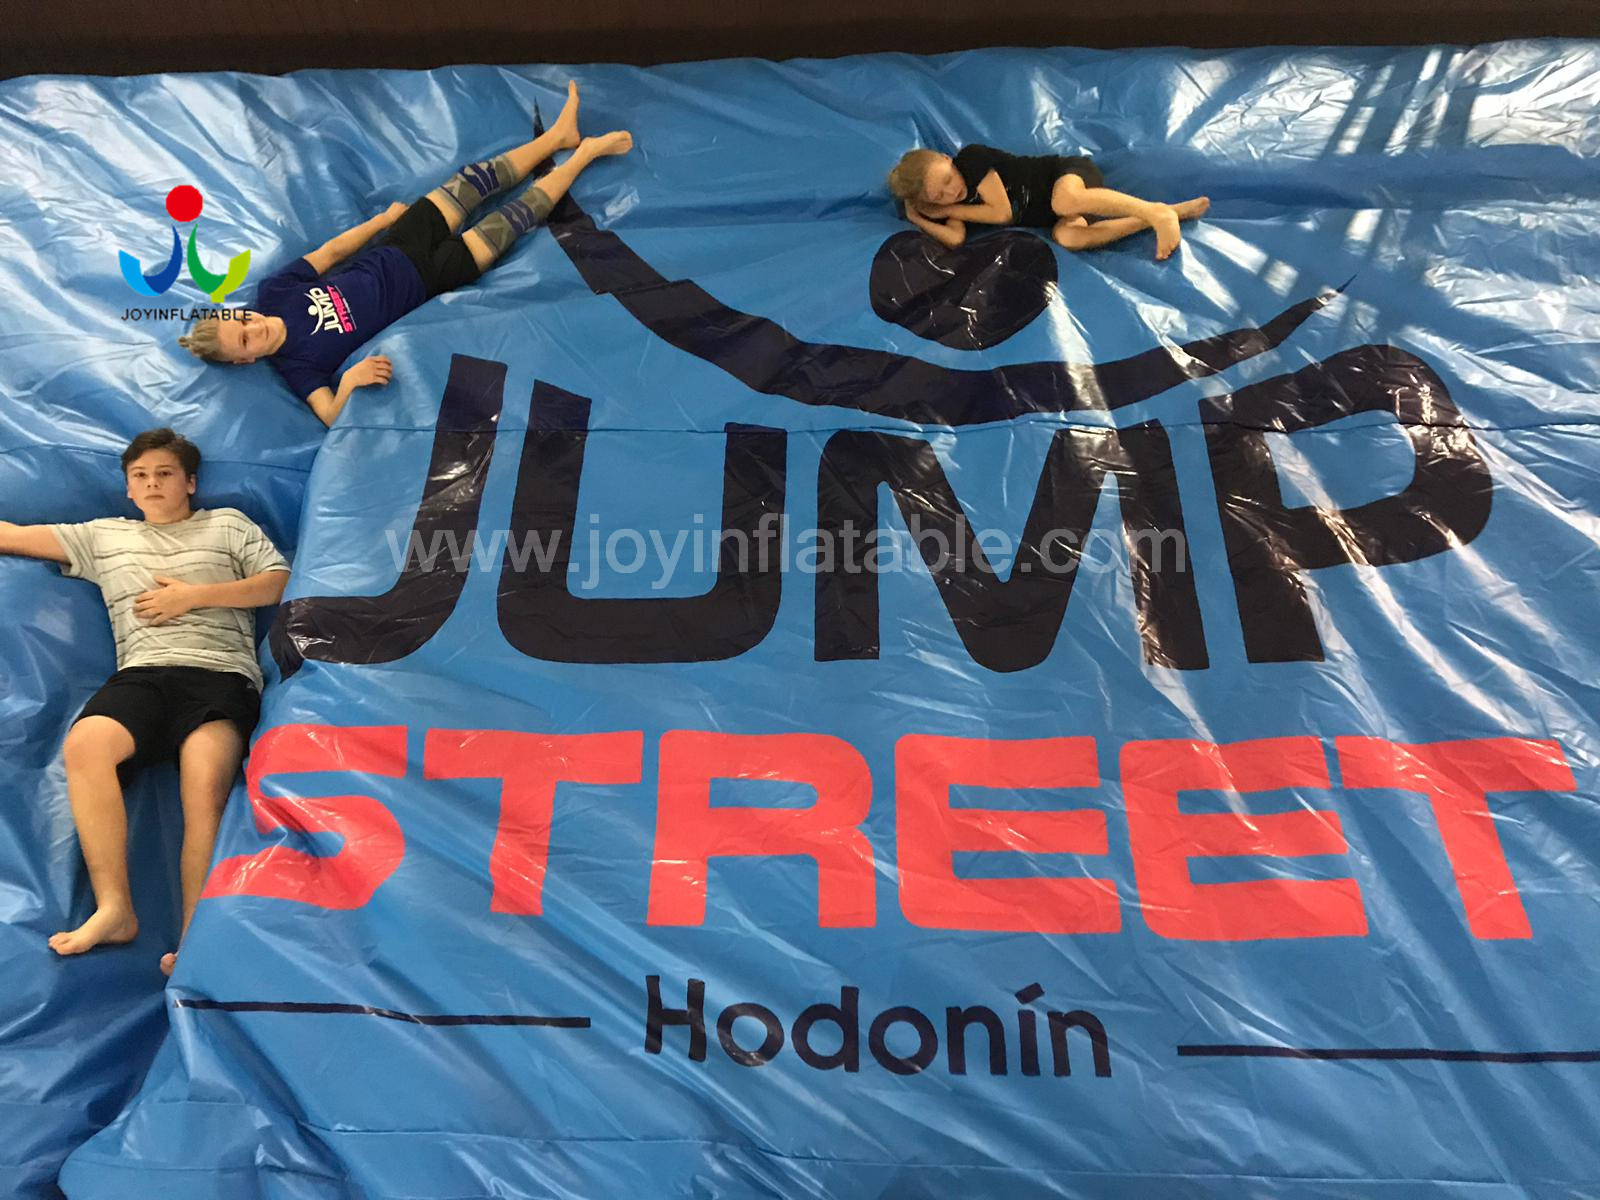 JOY Inflatable bag jump airbag price vendor for skiing-2